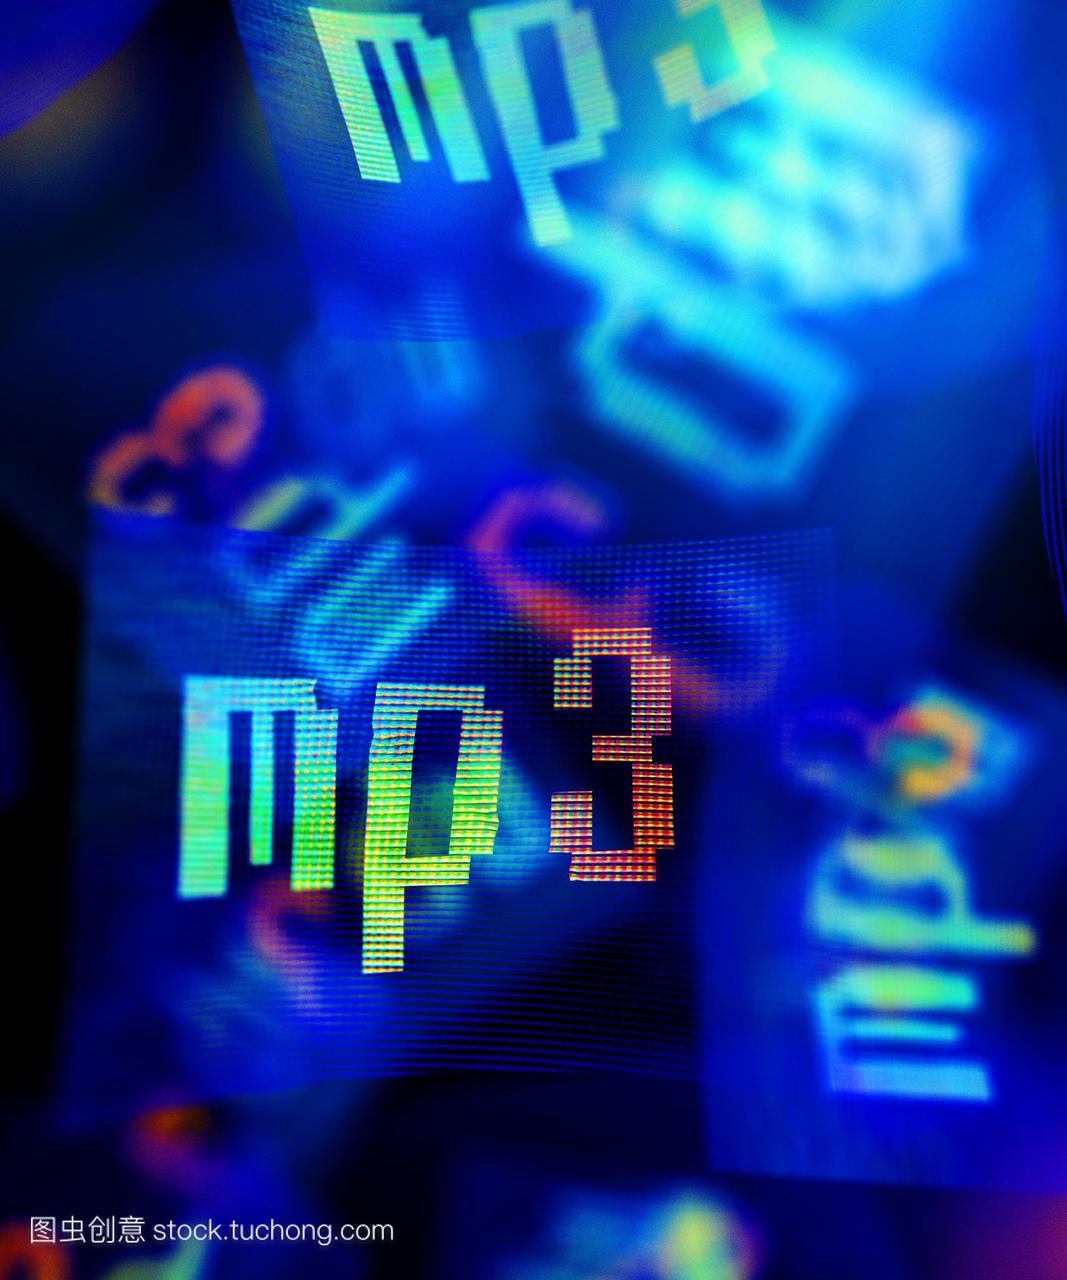 mp3。运动中mp3符号的计算机绘图。mp3是一